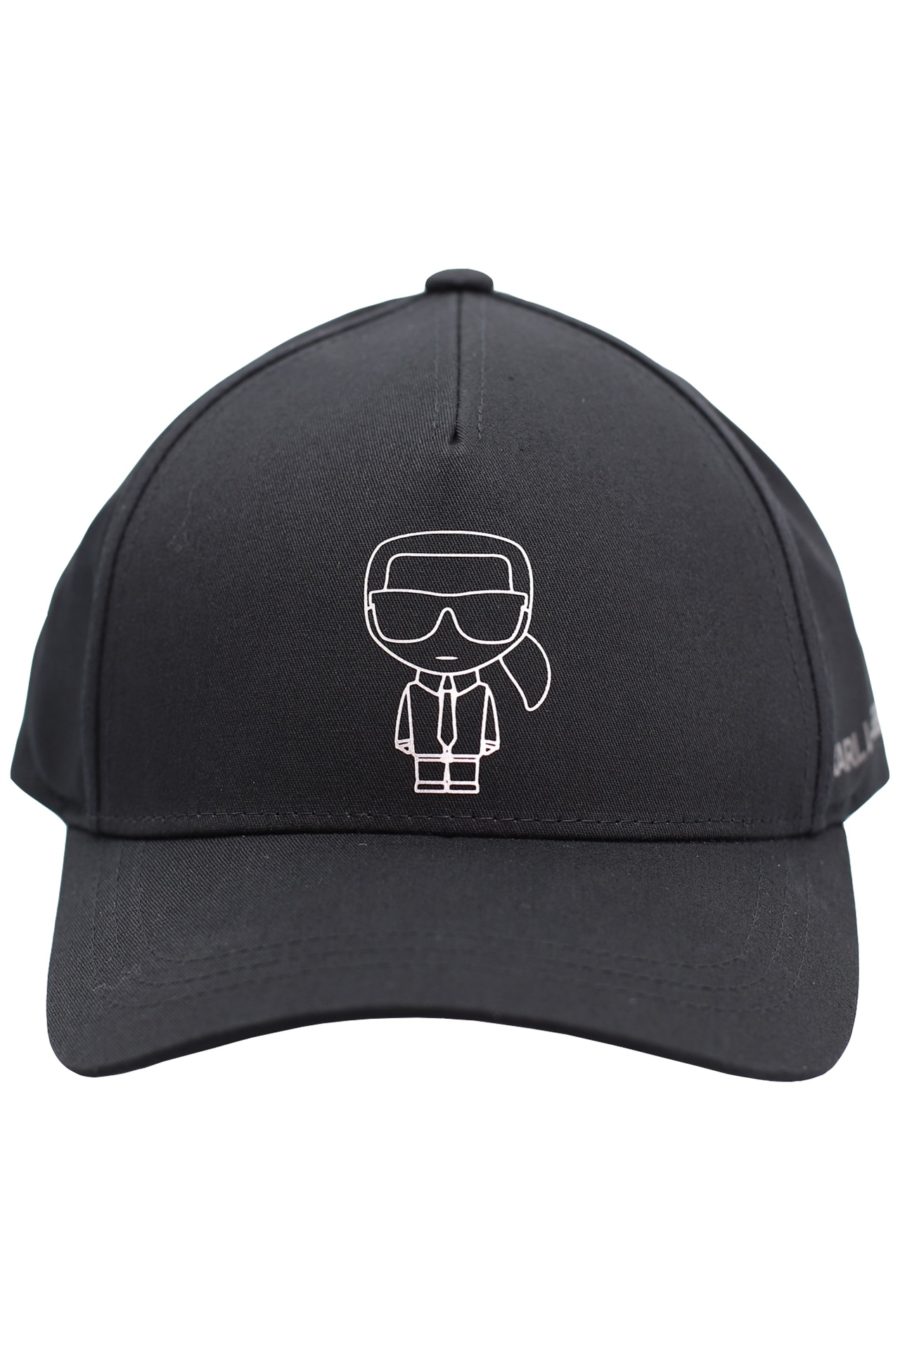 Black cap with silver "Karl" - db90cbca368b0a2d332b03da82bdd67624f6269d